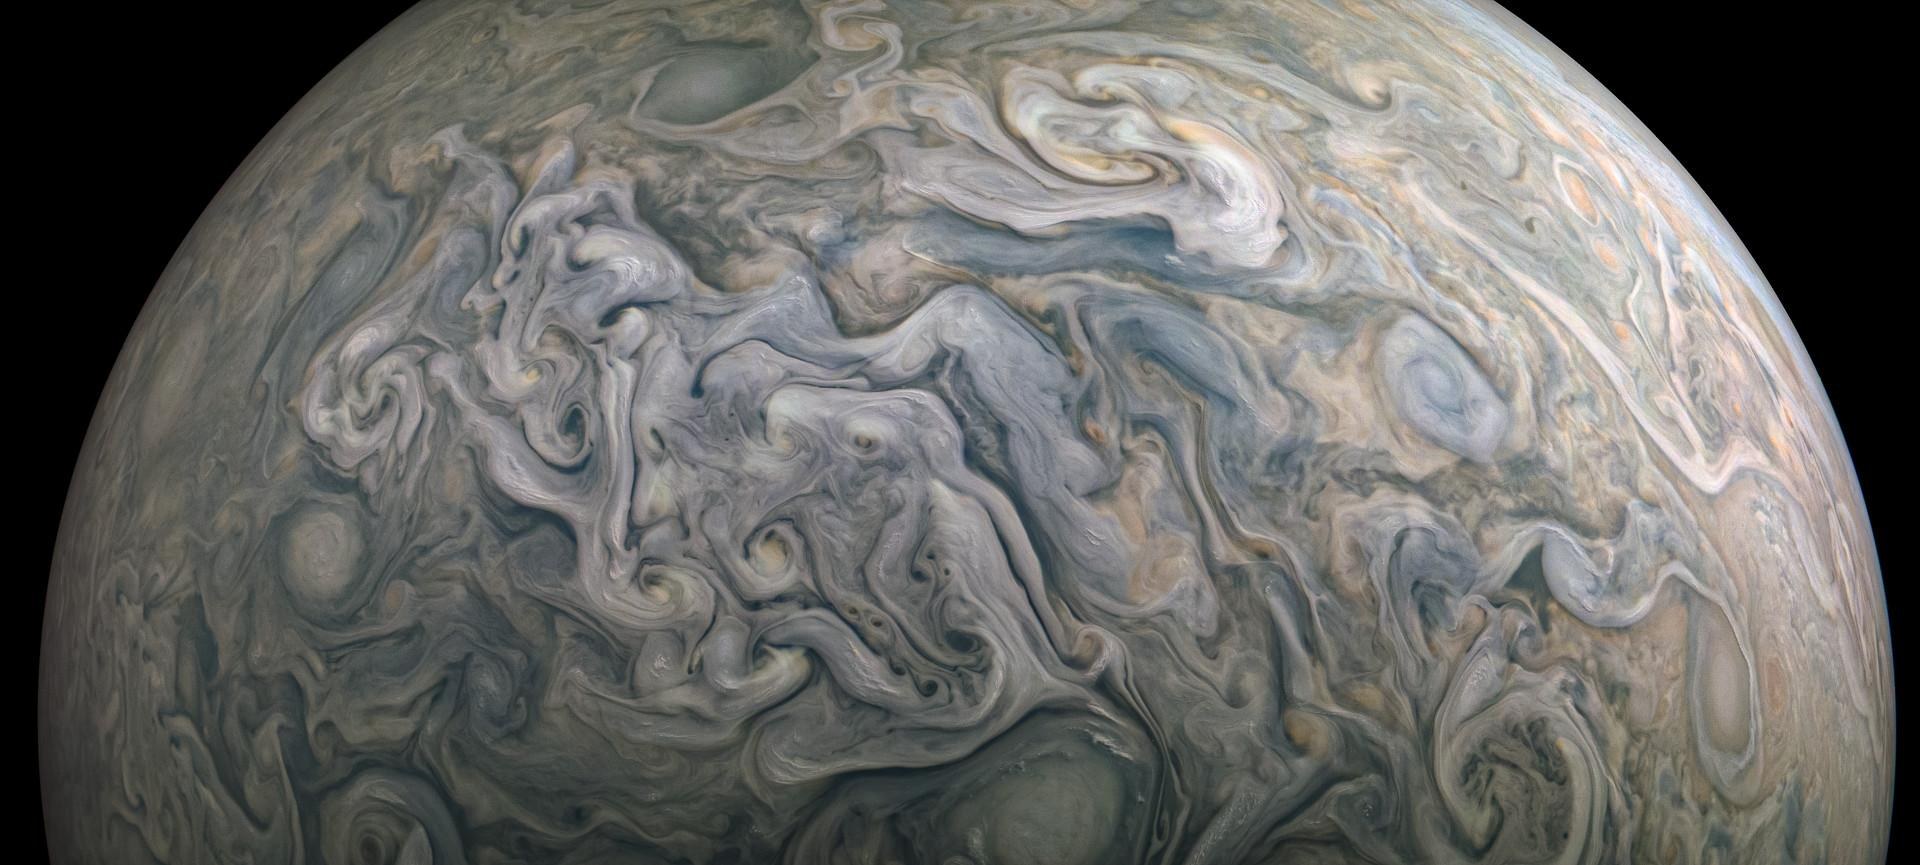 Swirling textures in Jupiter's atmosphere